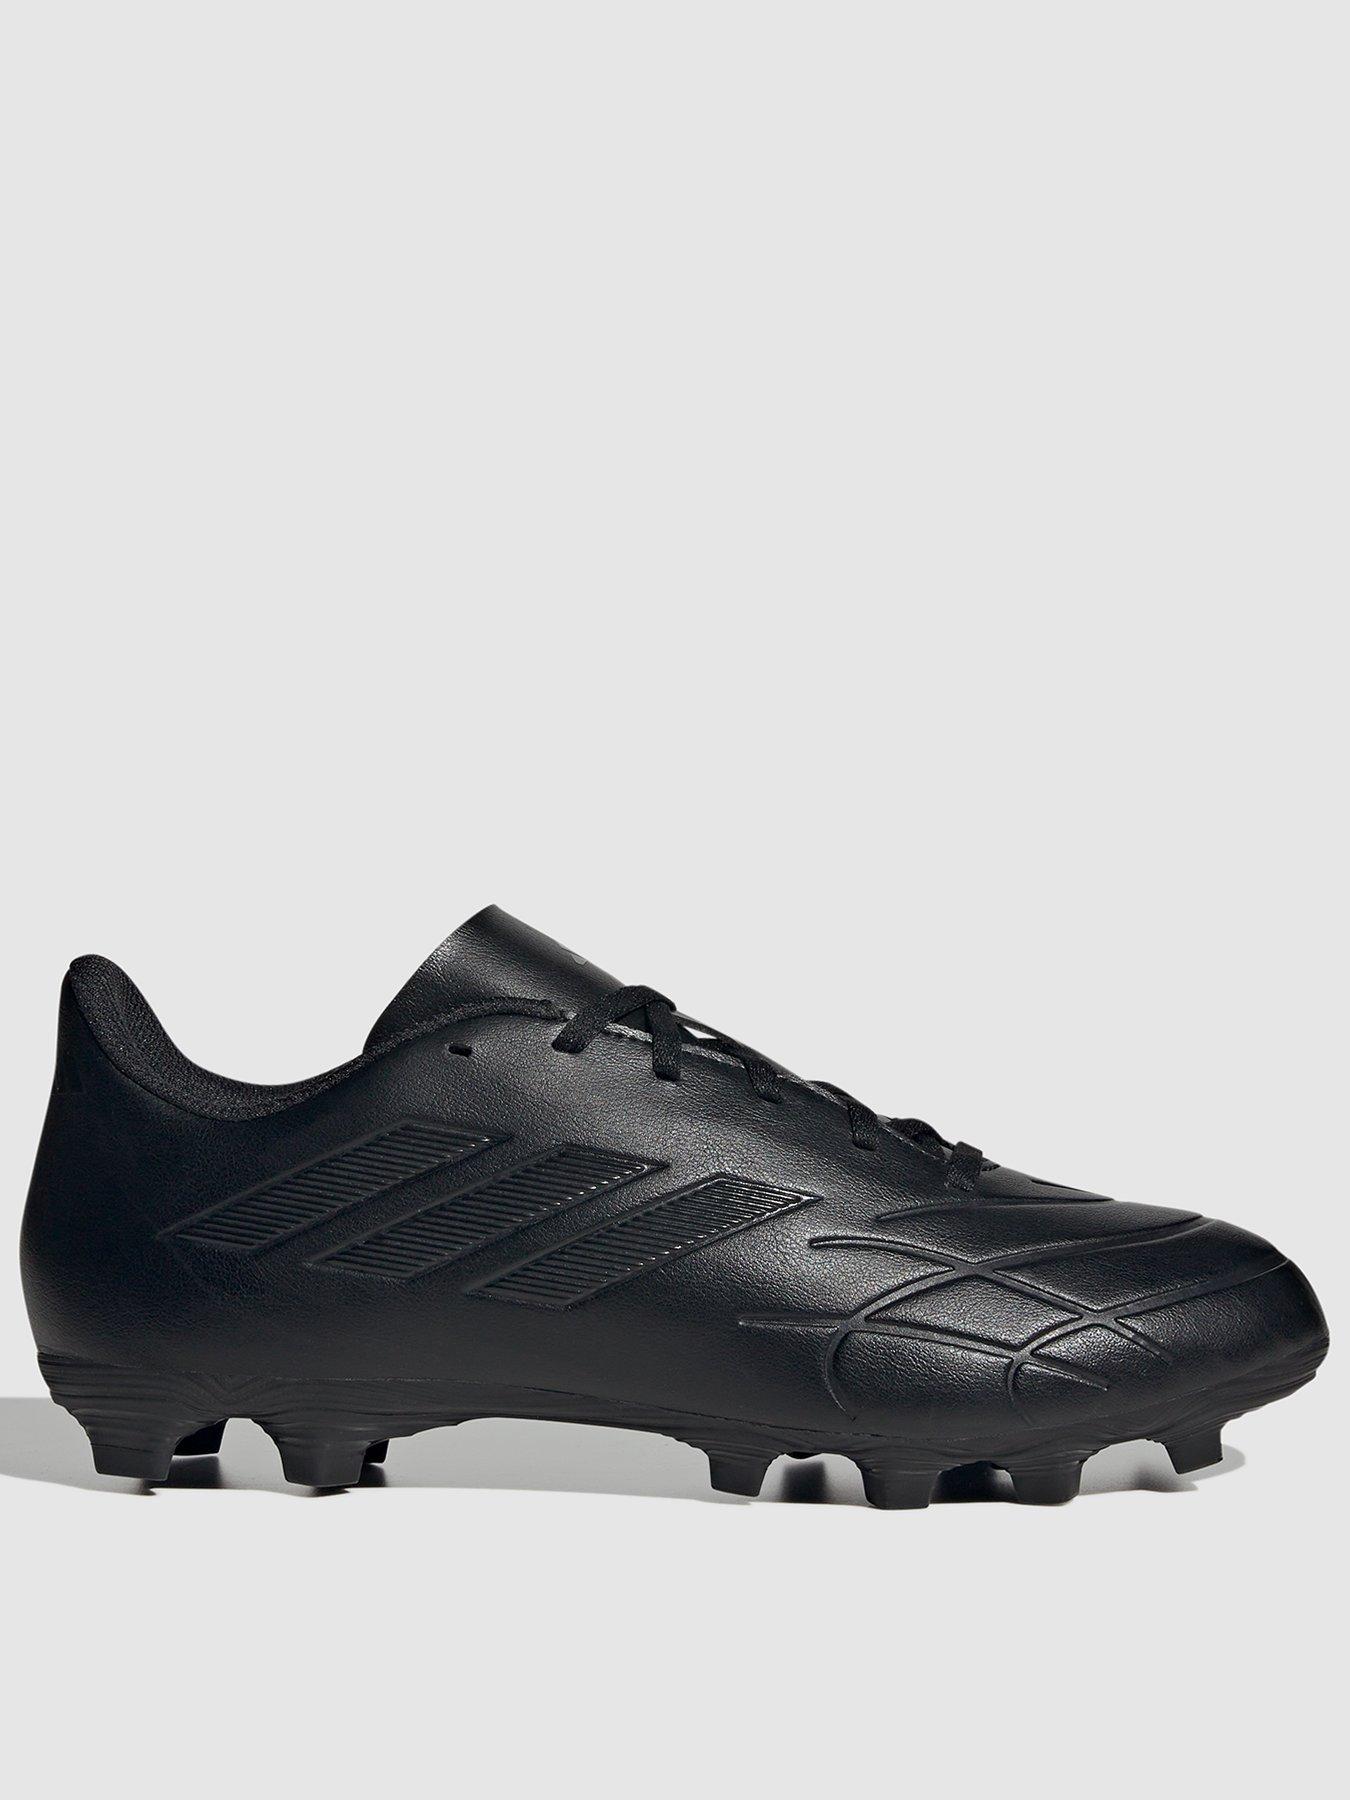 Football Boots | Nike, Adidas & More | Ireland